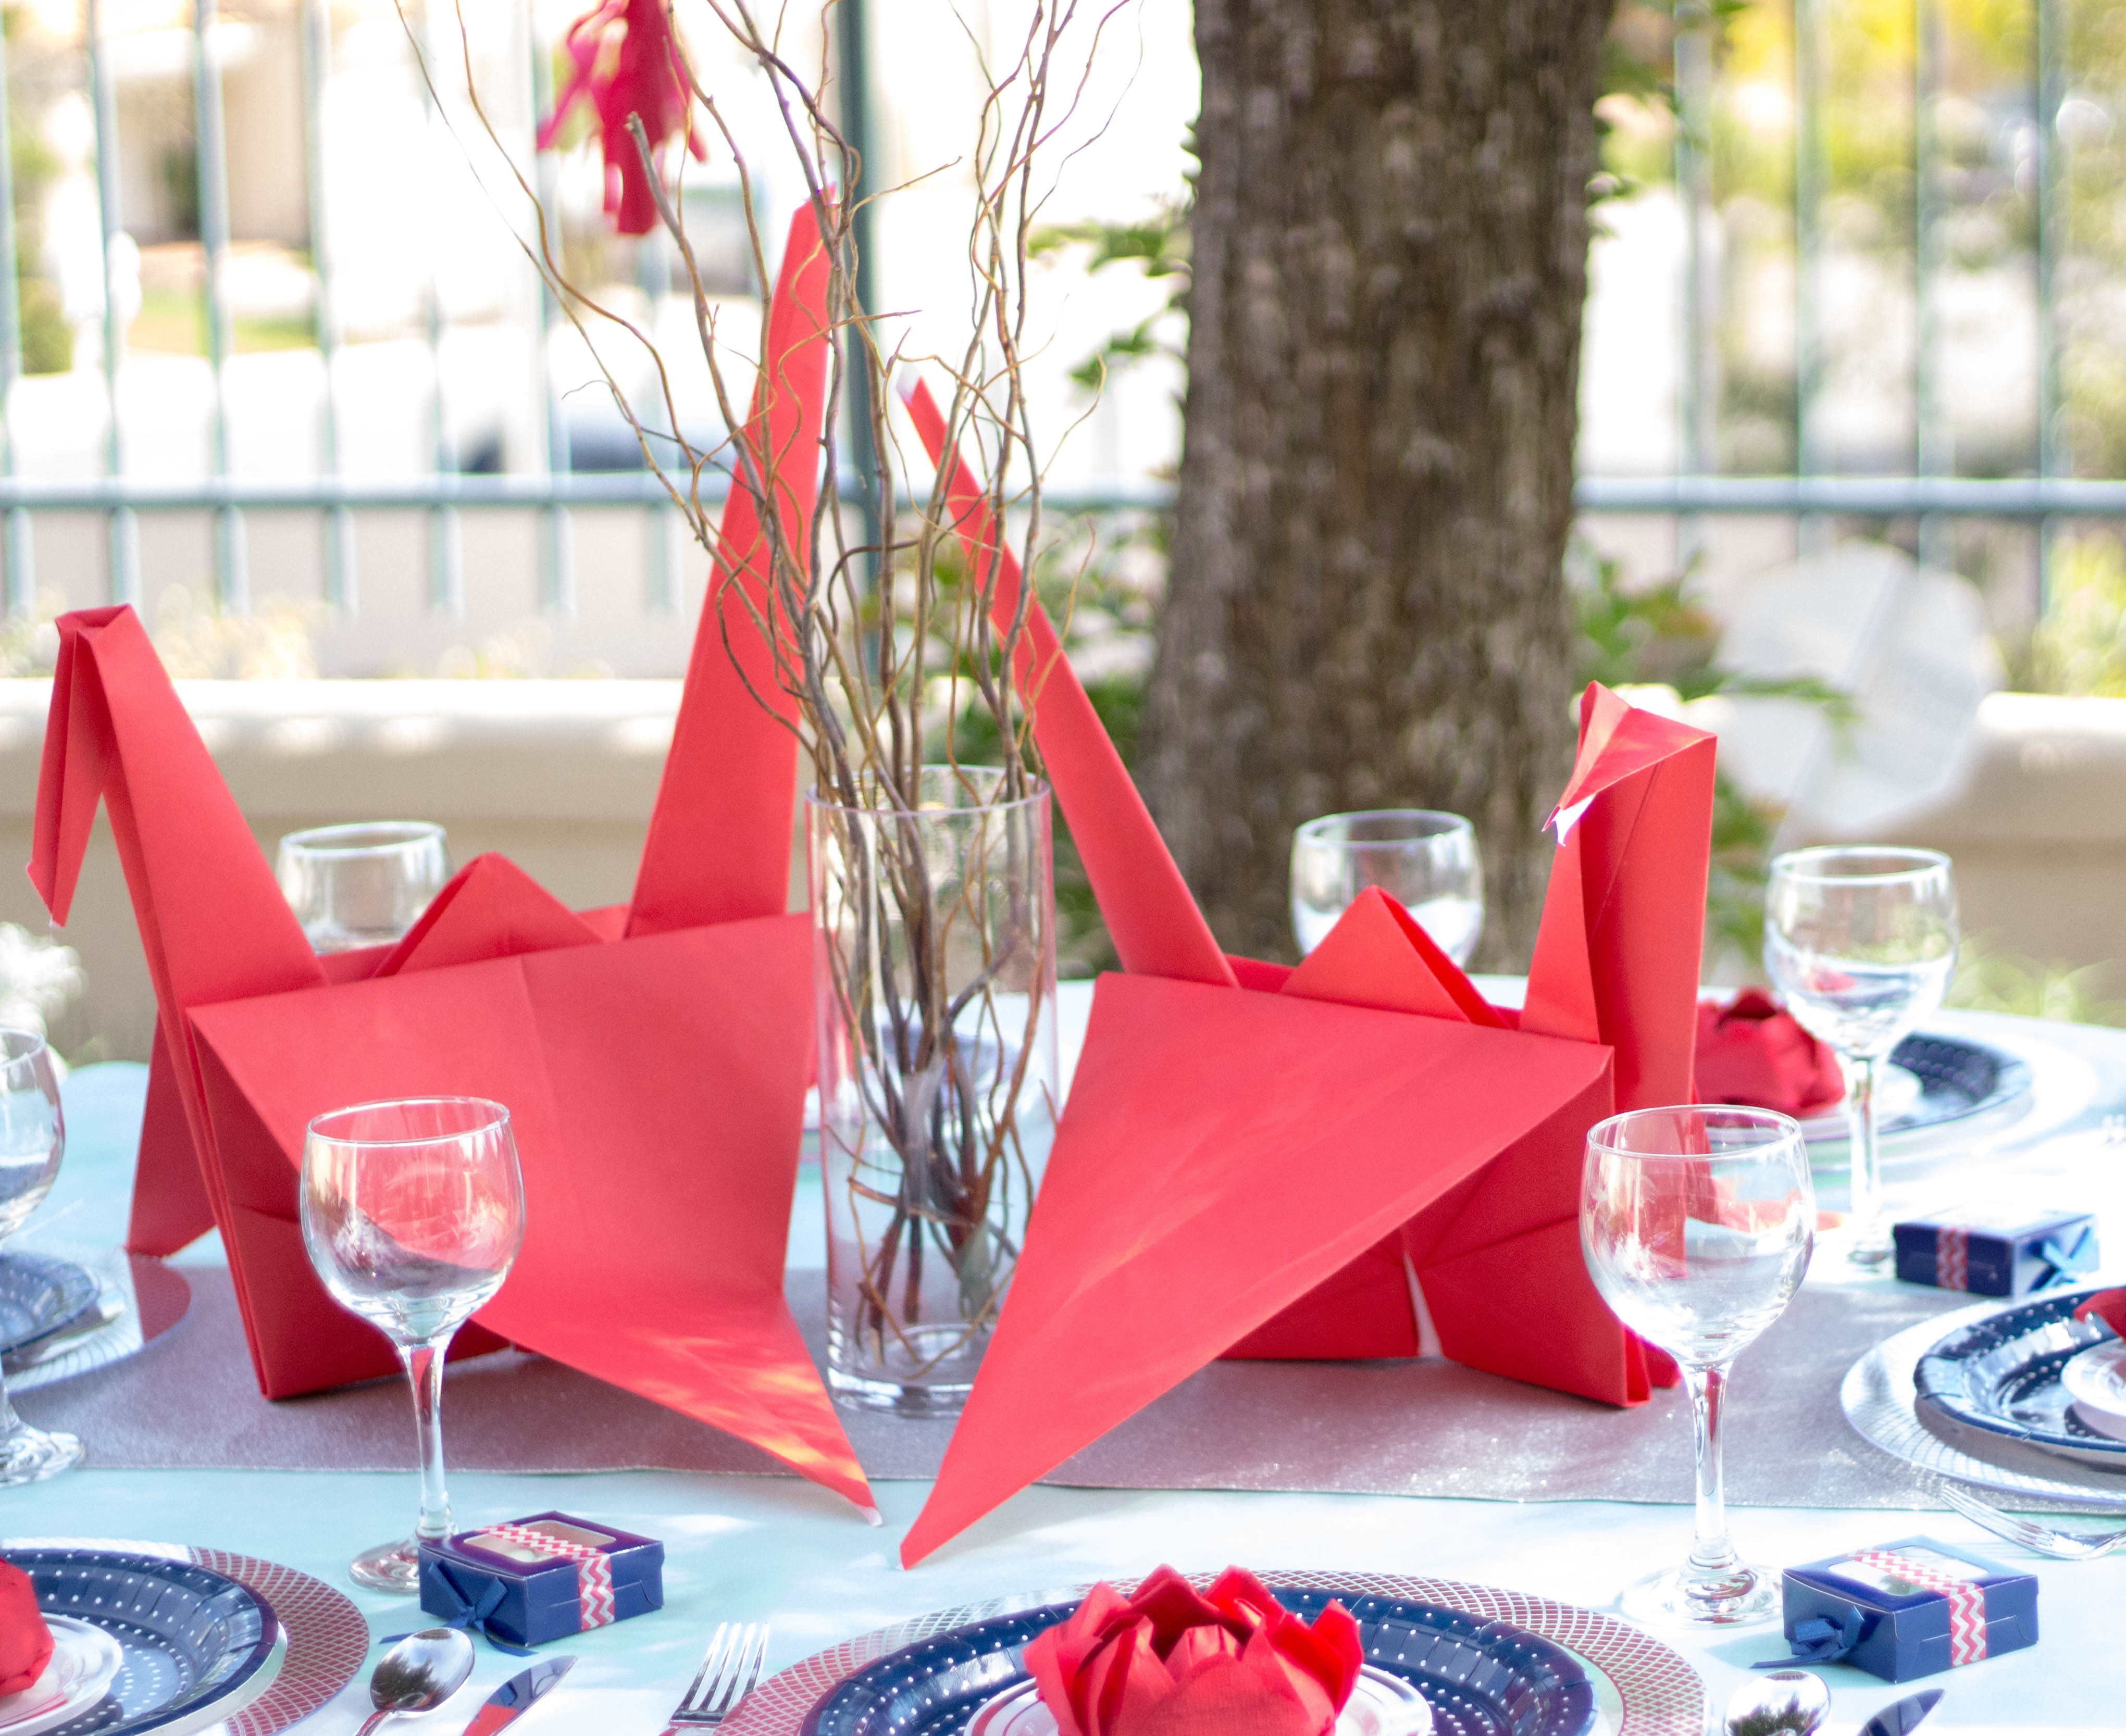 Origami Wedding Centerpieces Origami Themed Wedding Table And Centerpiece Ideas Fun365